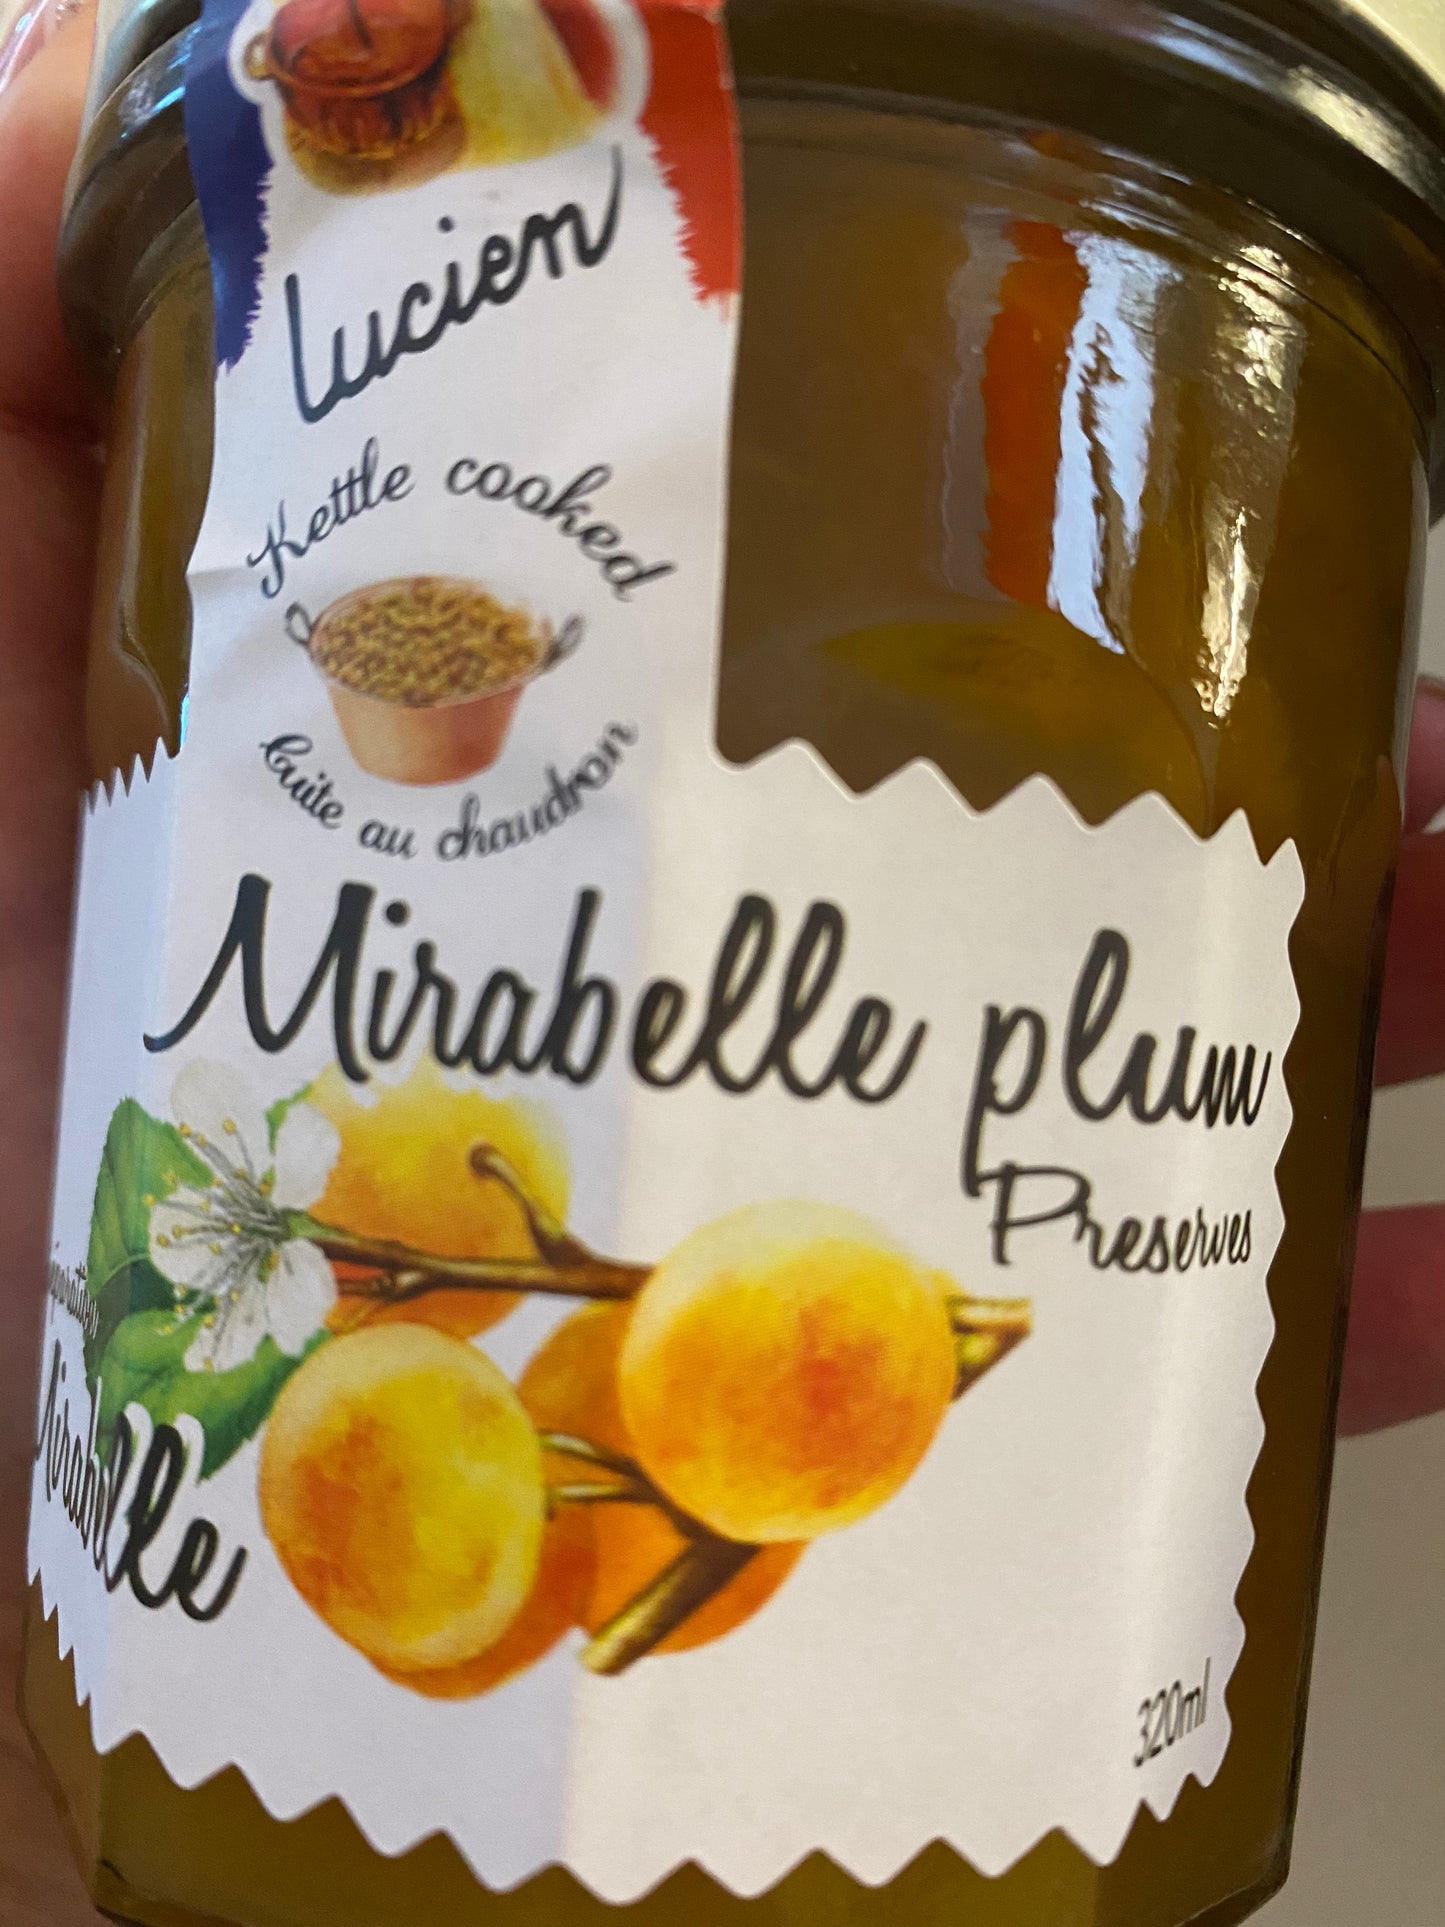 Lucien mirabelle plum jam